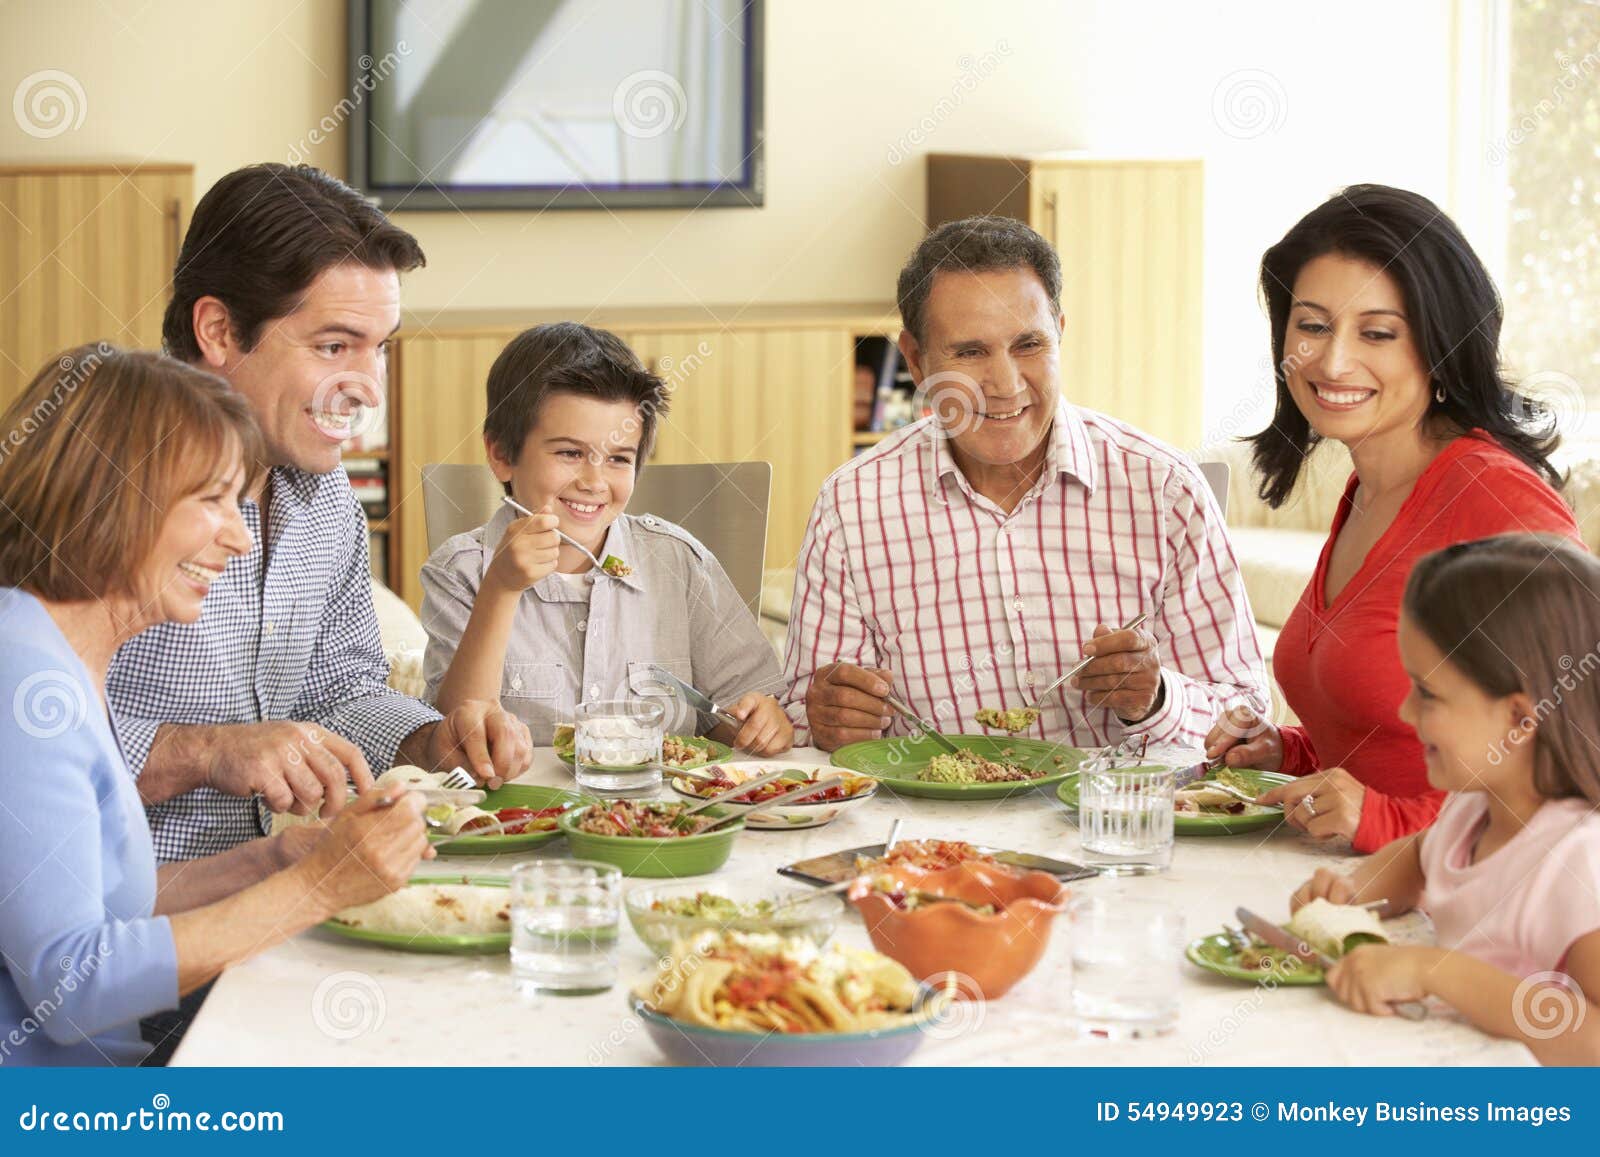 extended hispanic family enjoying meal at home